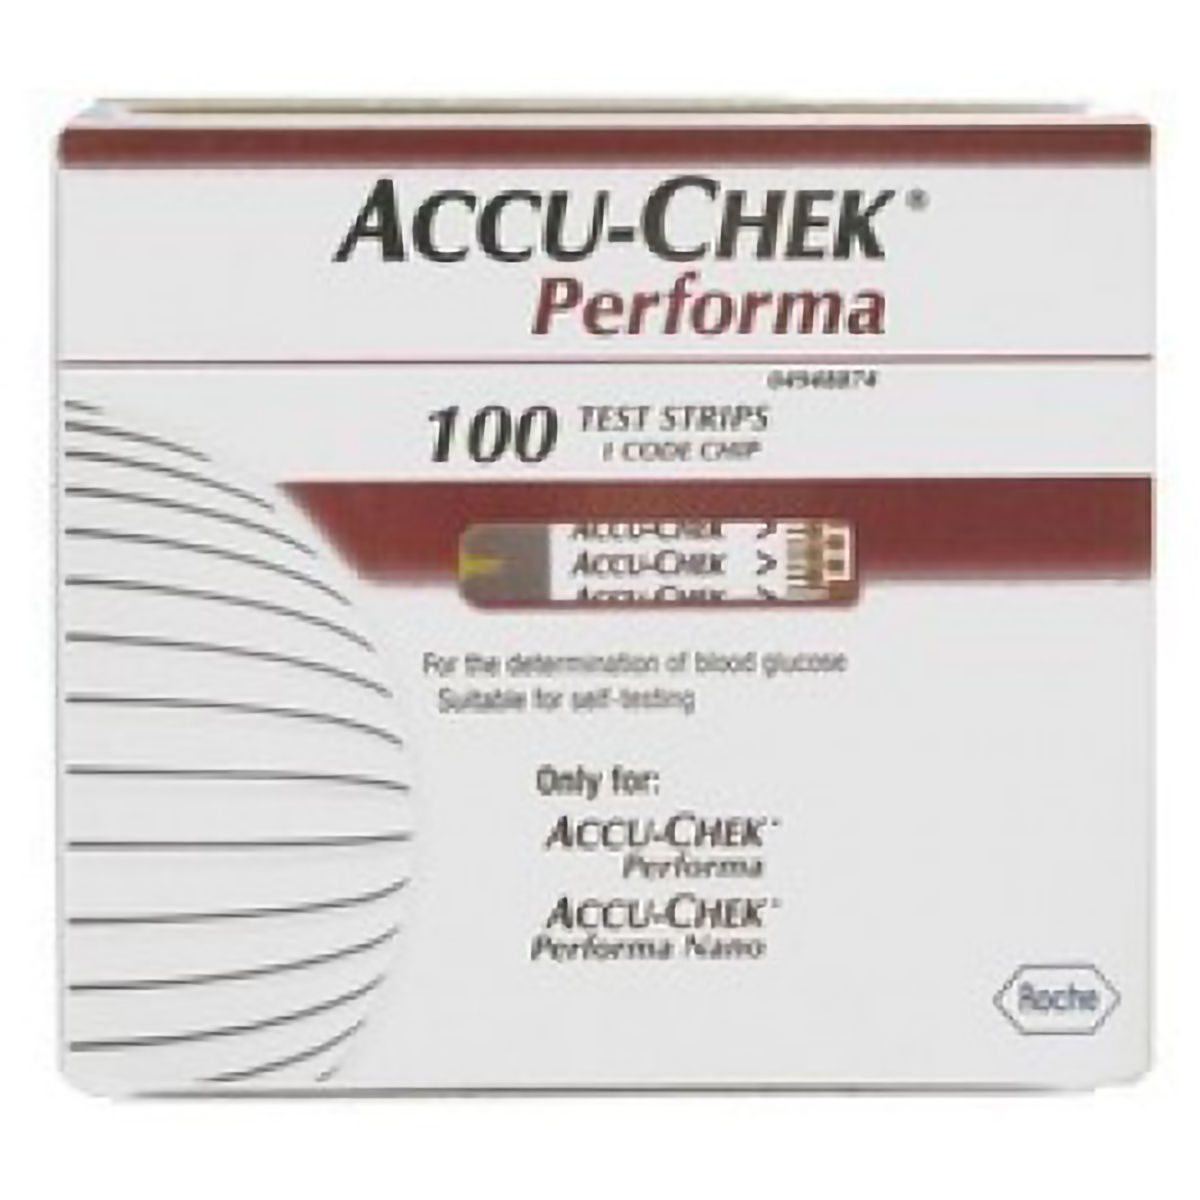 Buy Accu-Chek Performa Test Strips, 100 Count Online